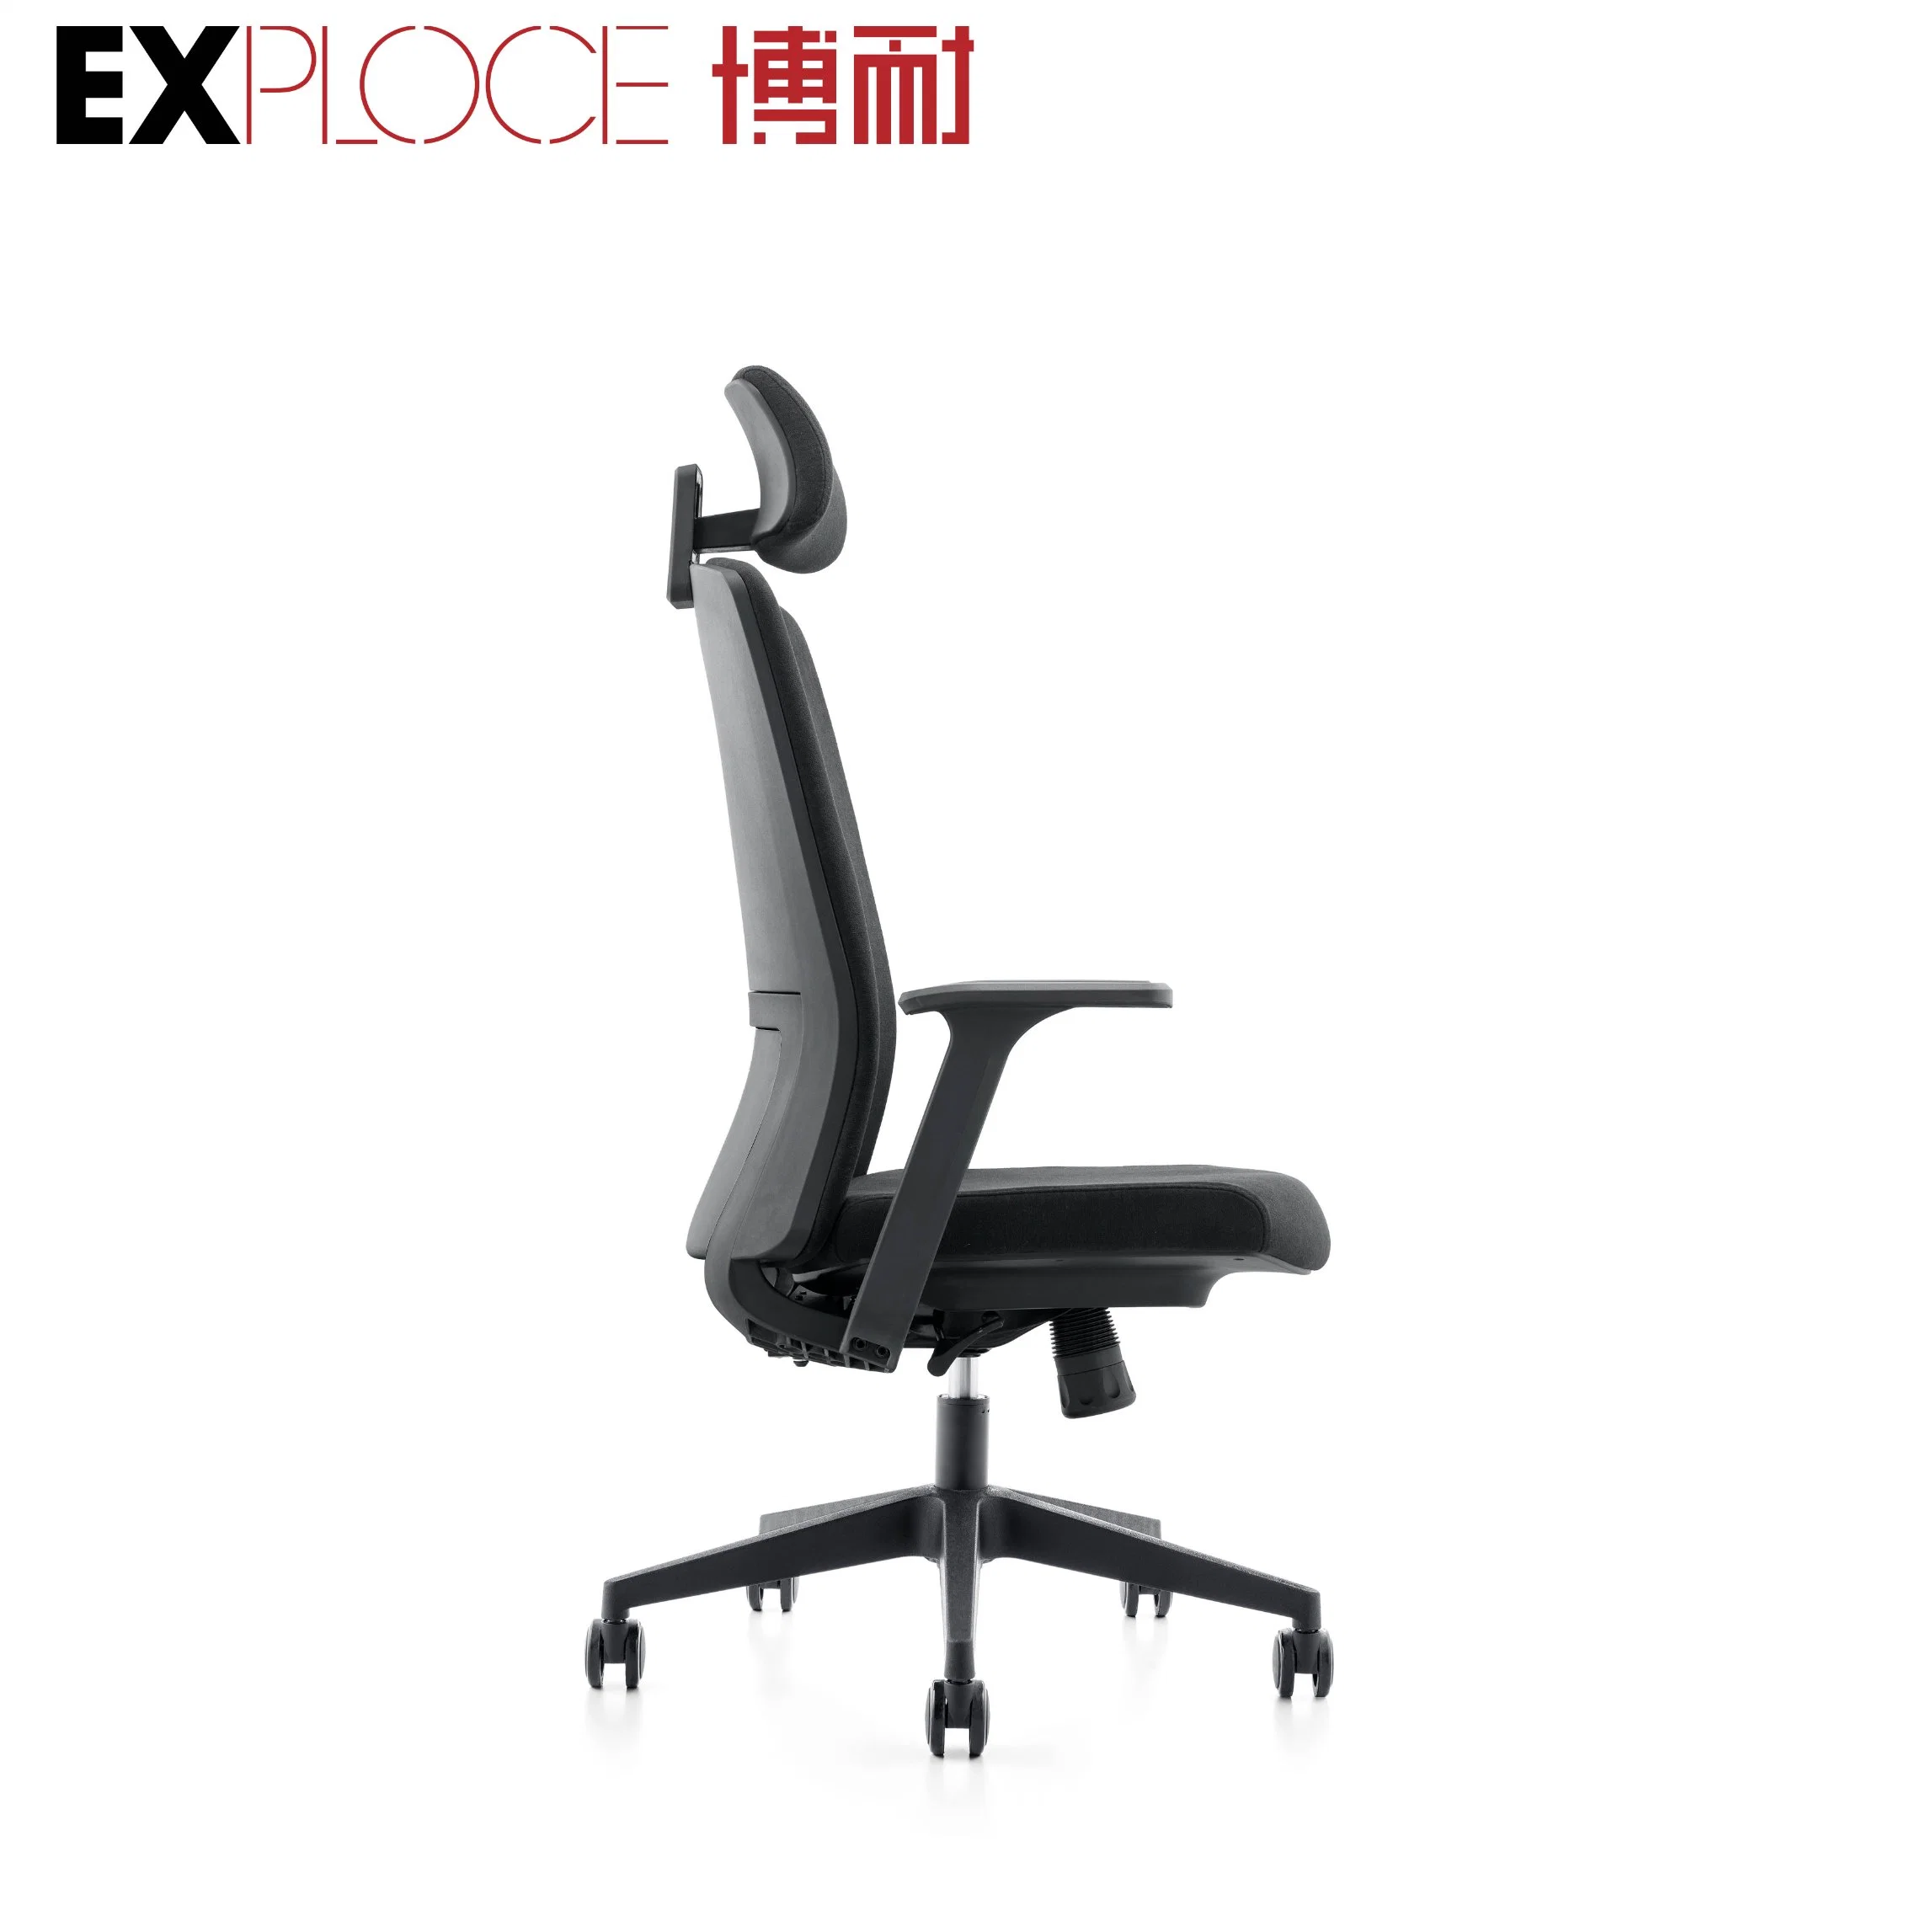 Modern Design Executive Meeting Laptop Table Ergonomic Chair Hot Sale Swivel Mesh Office Chairs